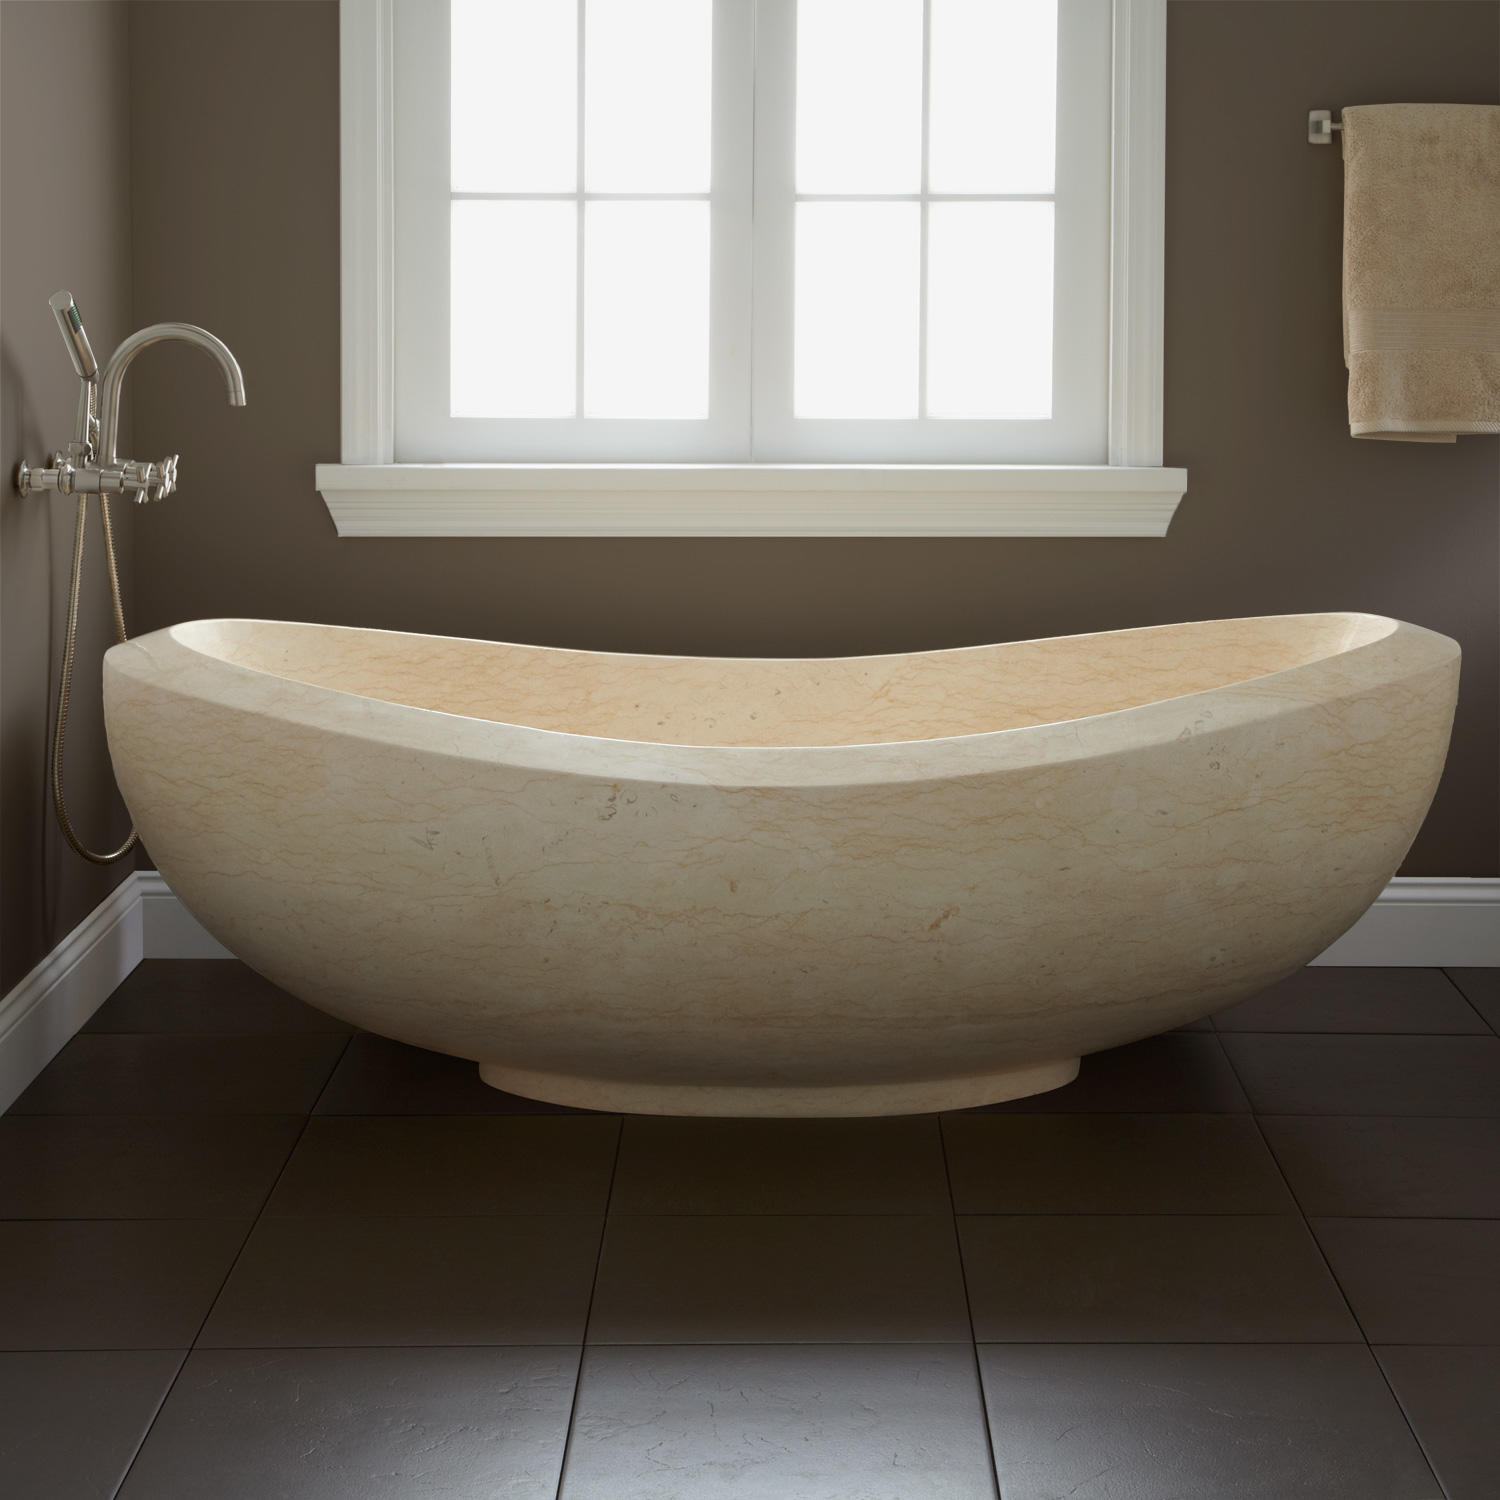 Beige stone tub bathroom stone bathtub Featured Image